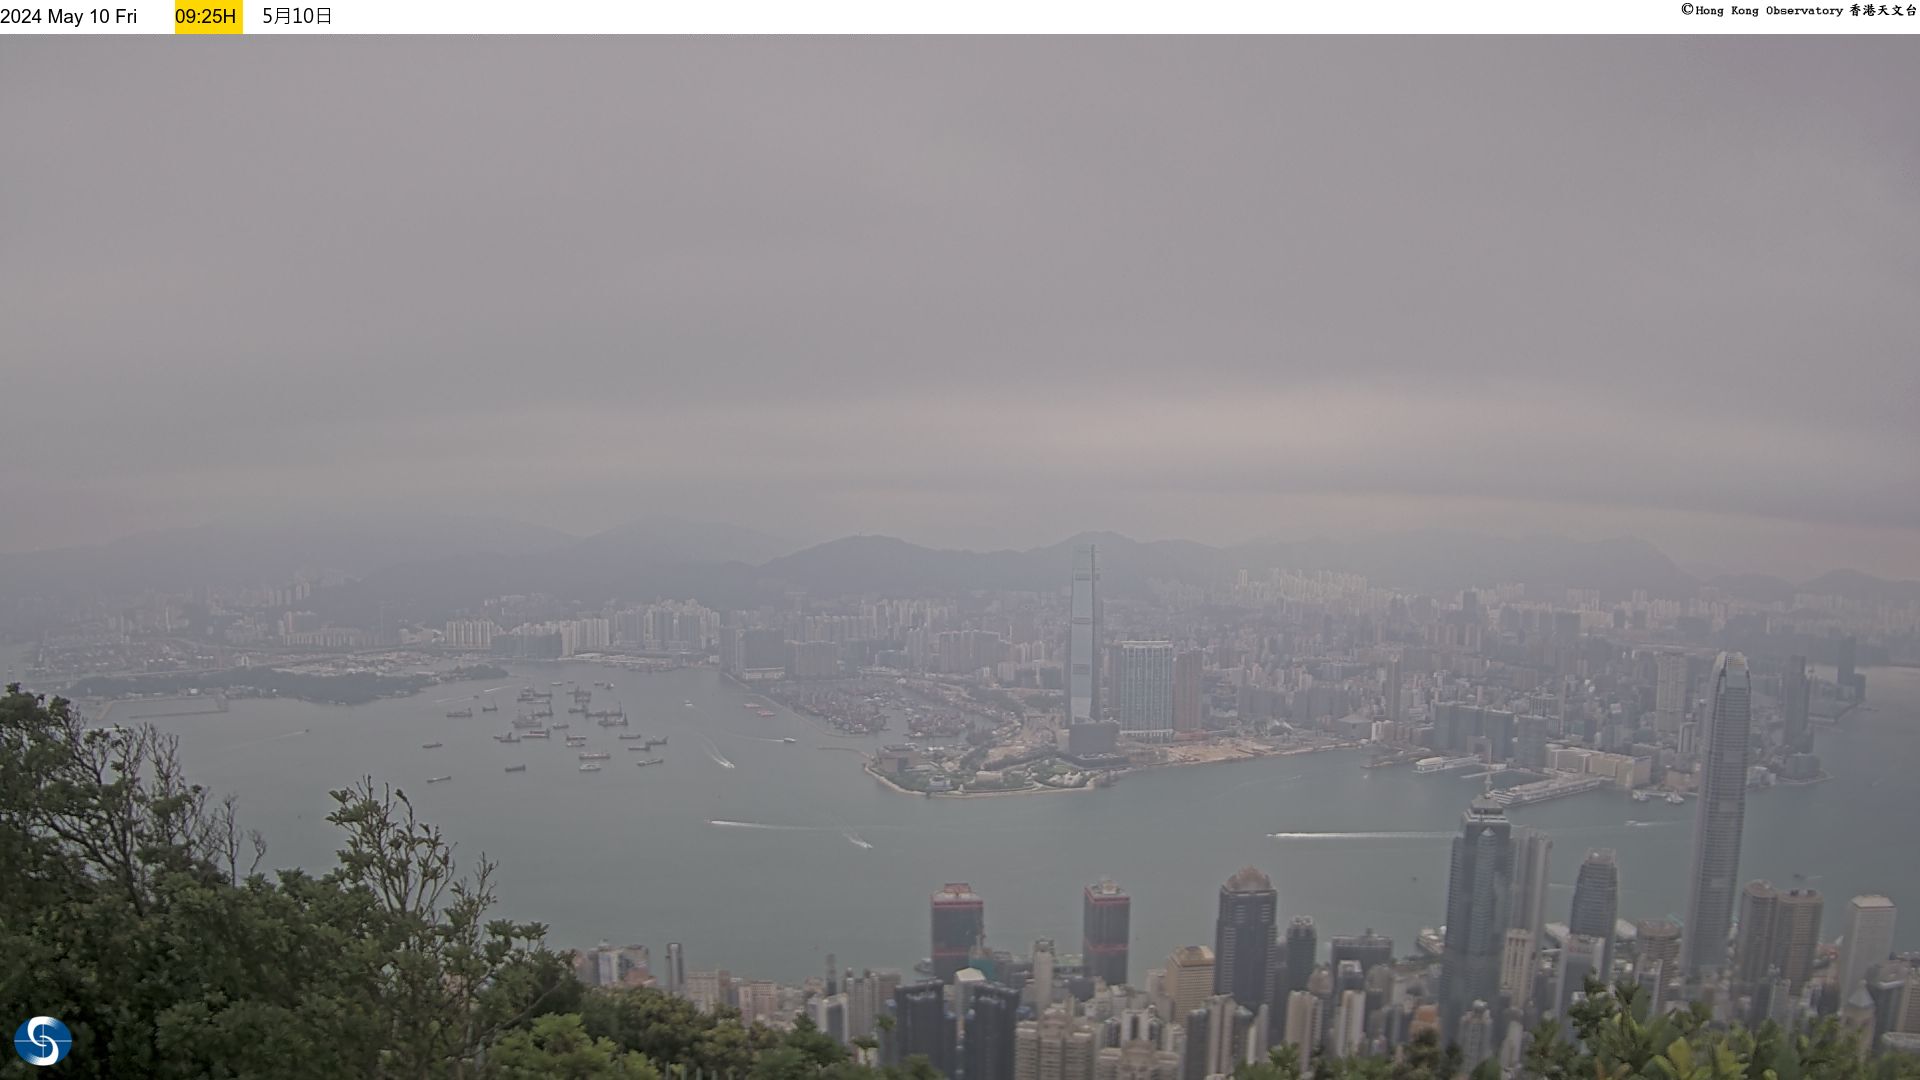 Hong Kong Fr. 09:33